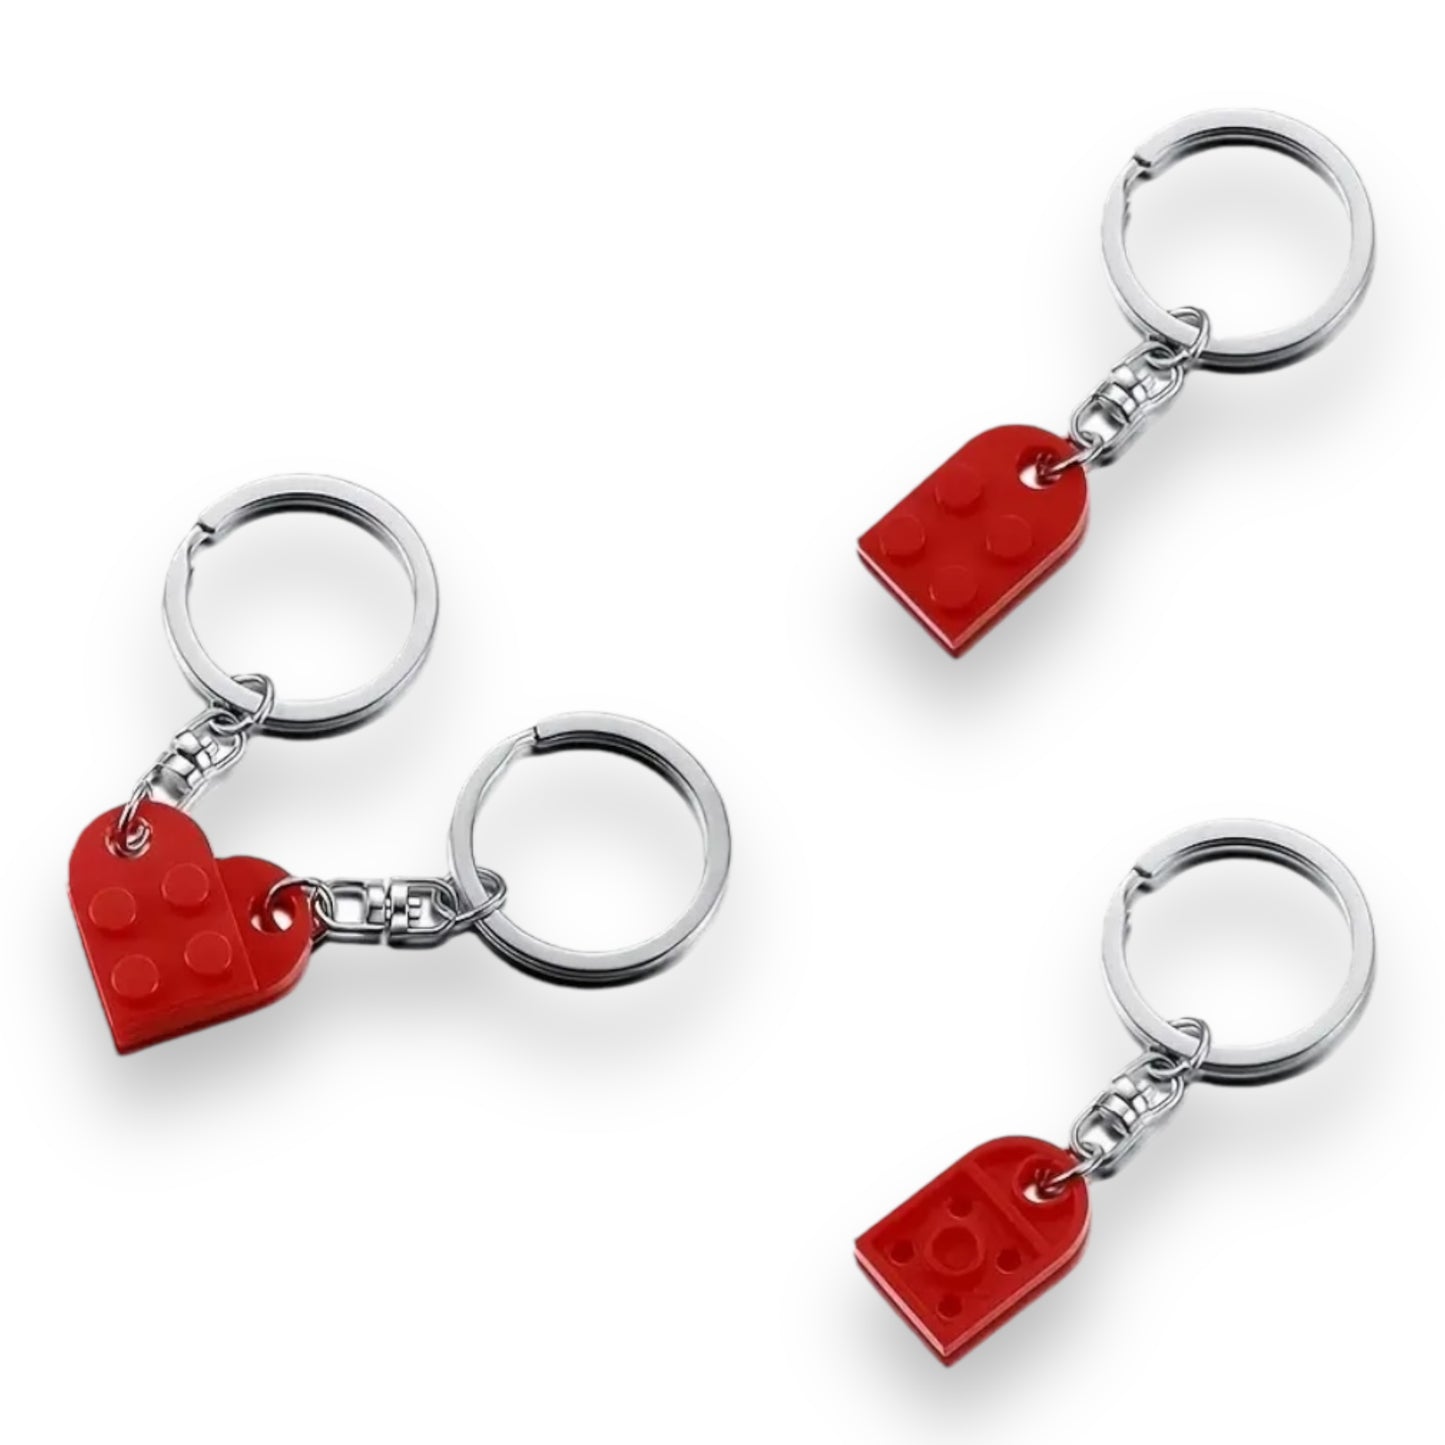 Kinky Pleasure - T046 - Keychain Hearts Blocks Connected Red